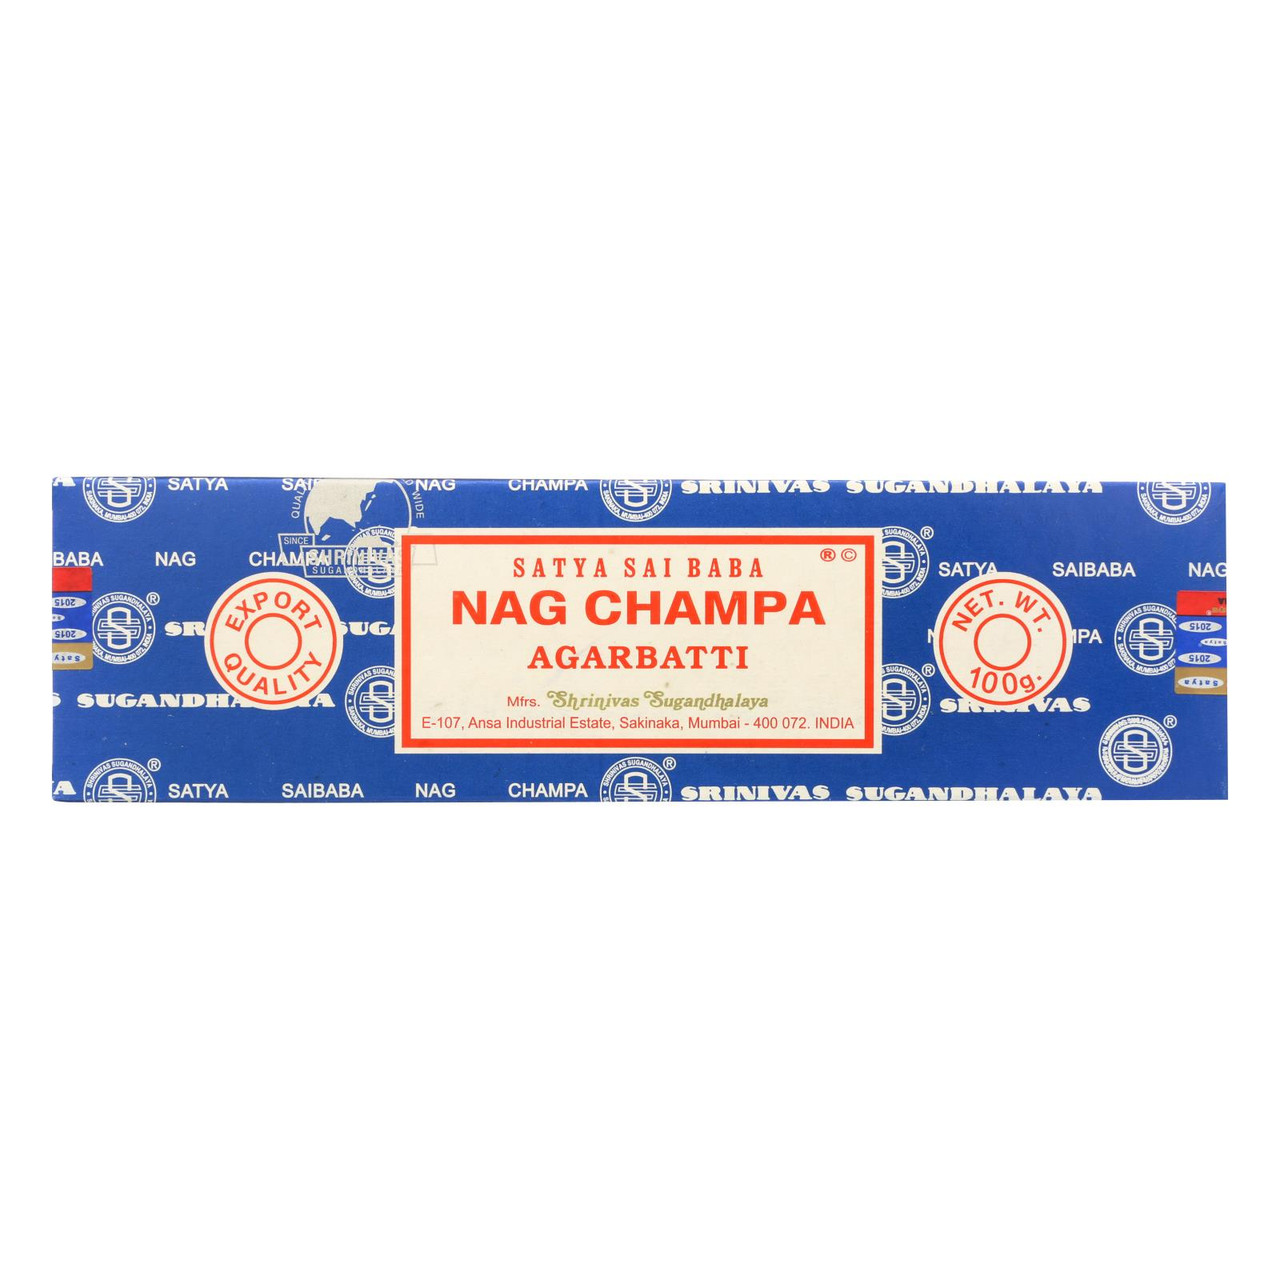 Nag Champa Fragrance Oil (case 18 units)